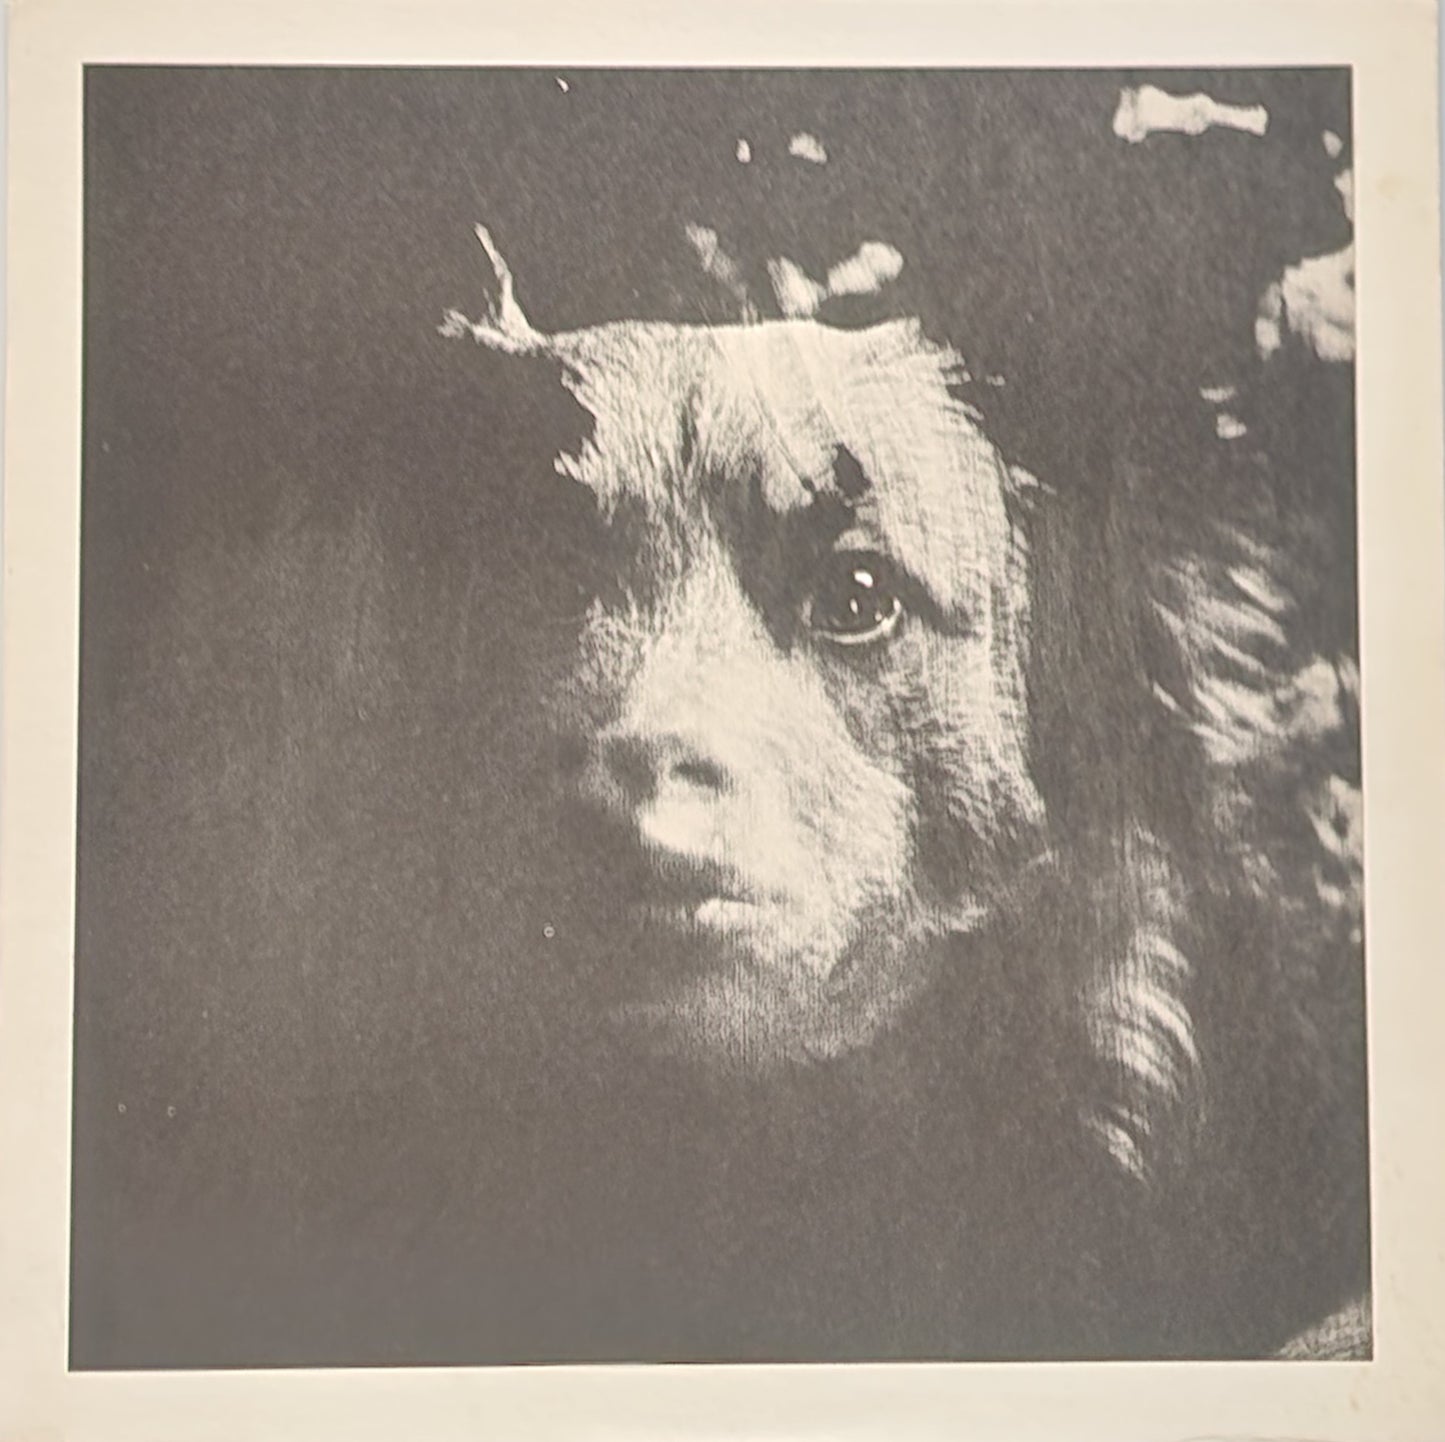 Extremely Rare Vinyl LP: Poetry – Charles Bukowski Steve Richmon (1968)